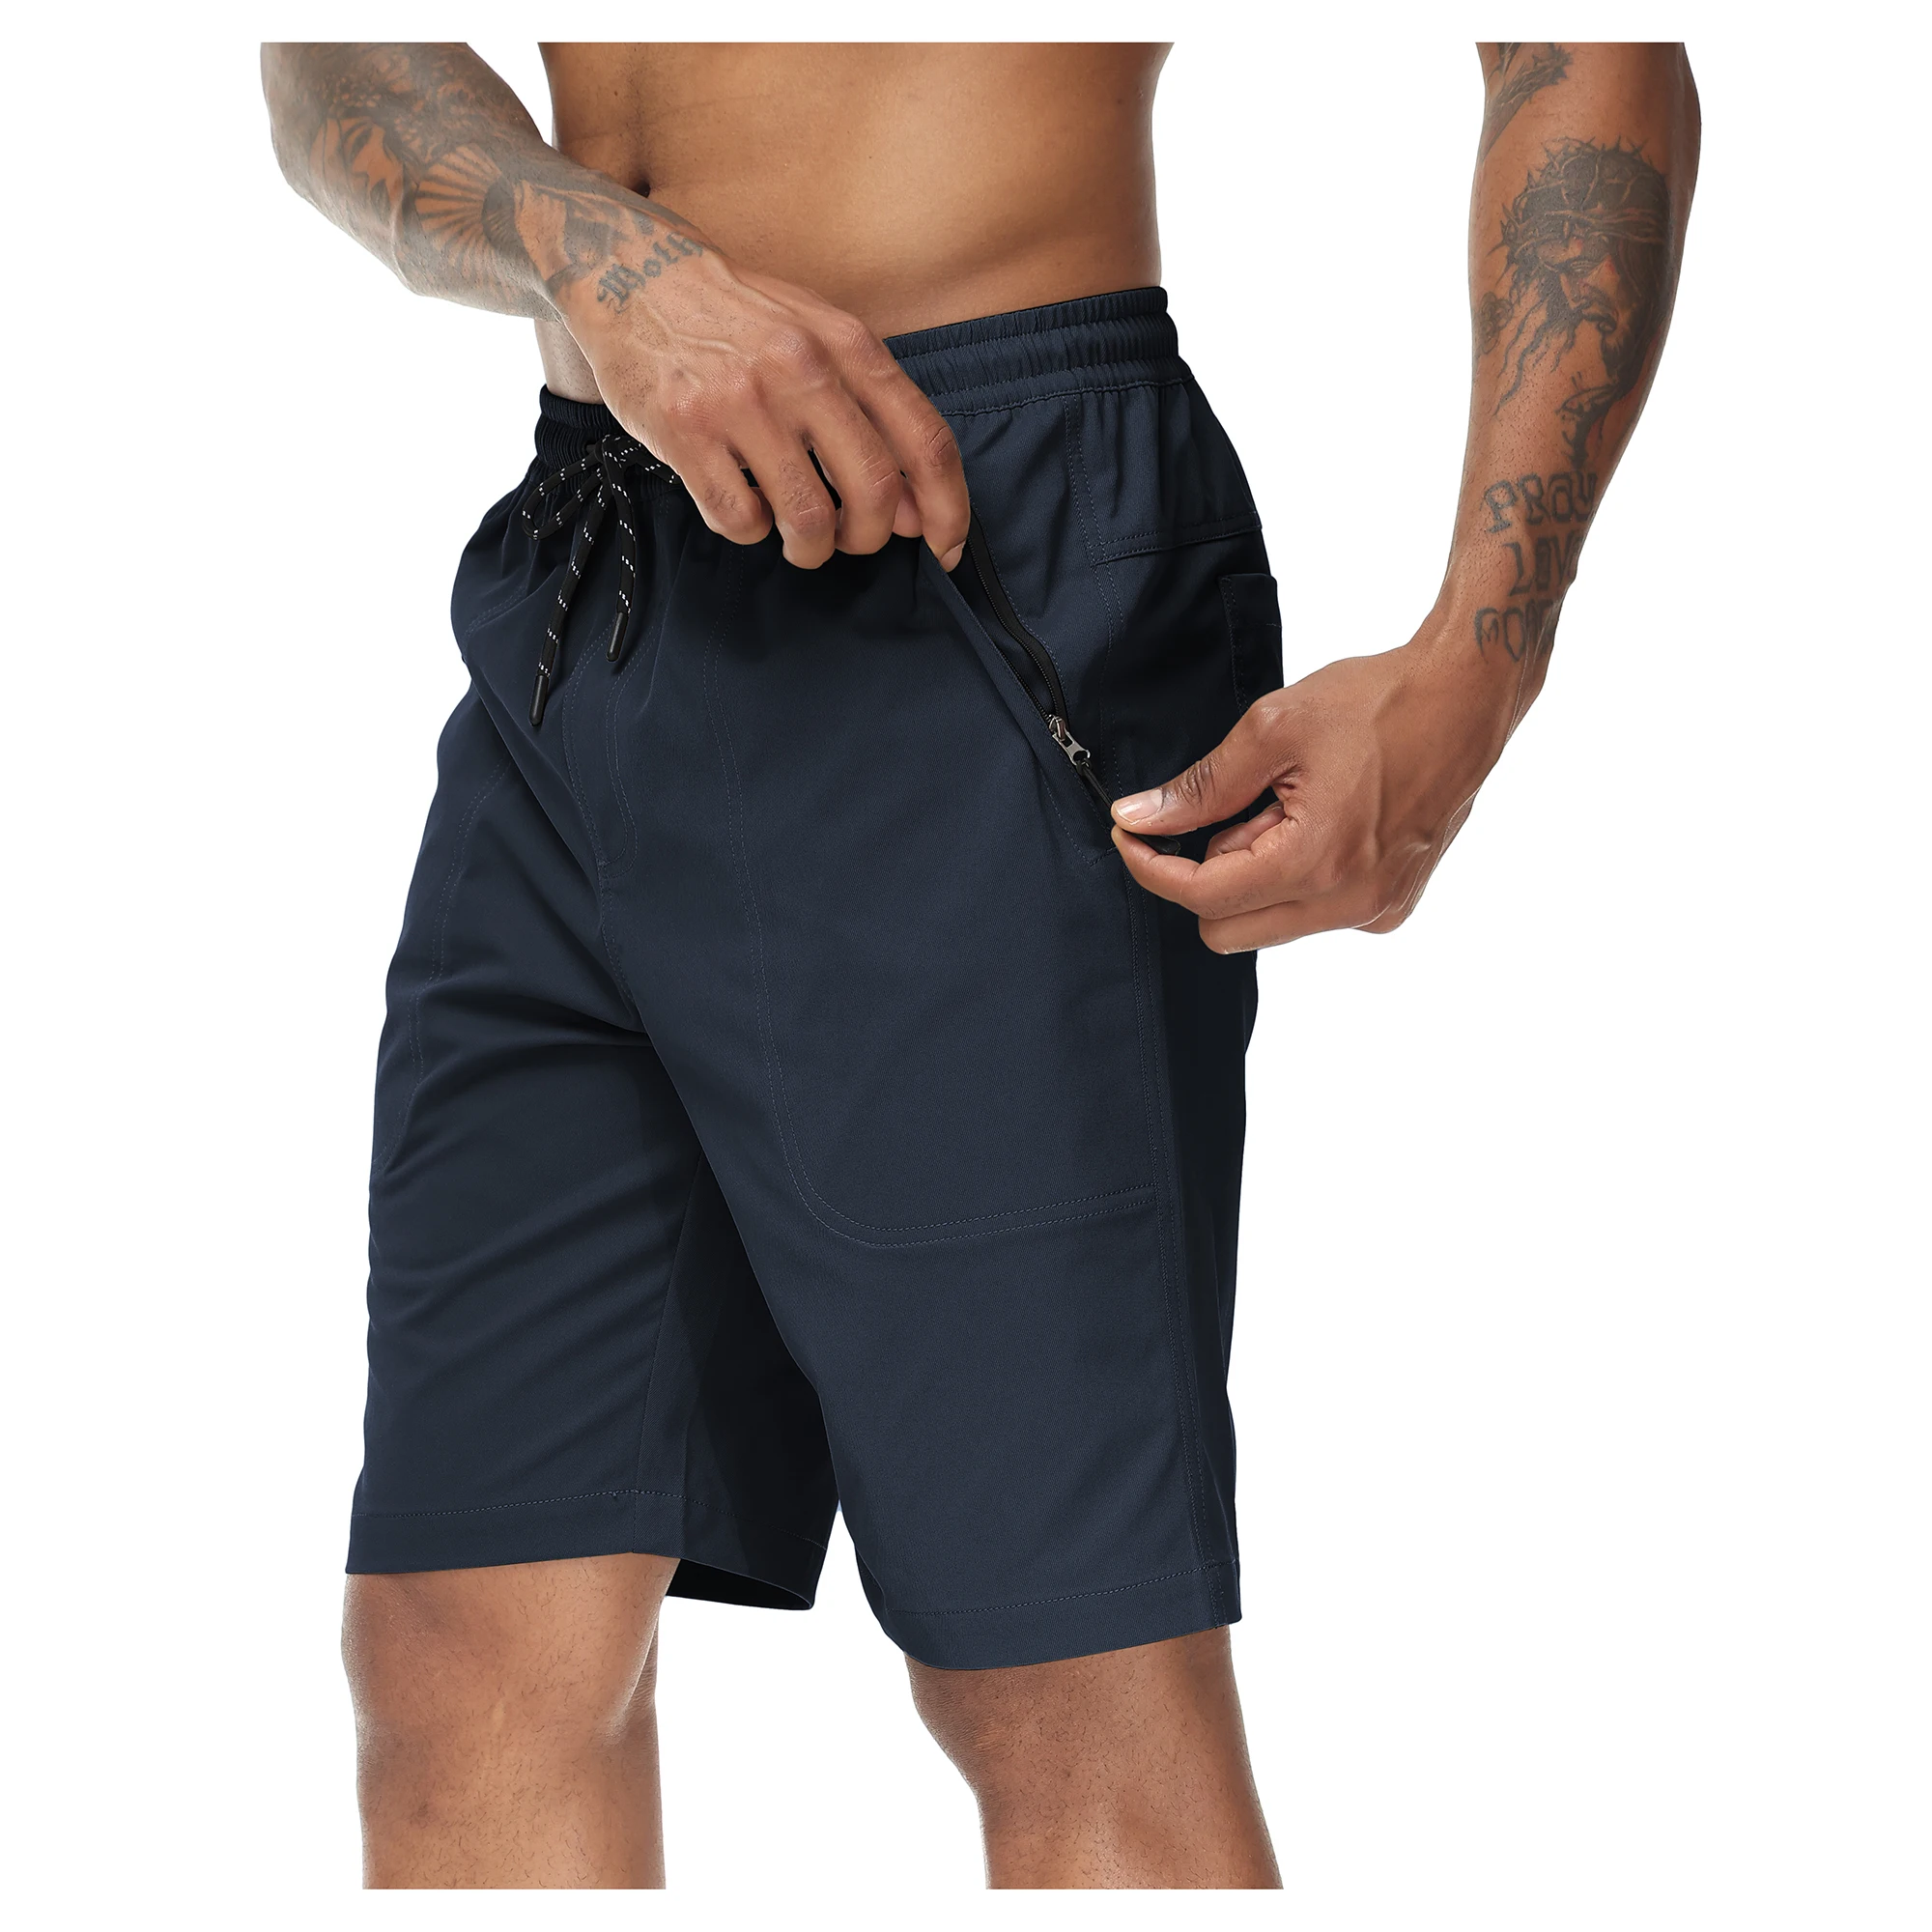 Summer Men's Solid Shorts Casual Drawstring Shorts Jogging Athletic Pants Lightweight High Quality Elastic Waist Cargo Shorts